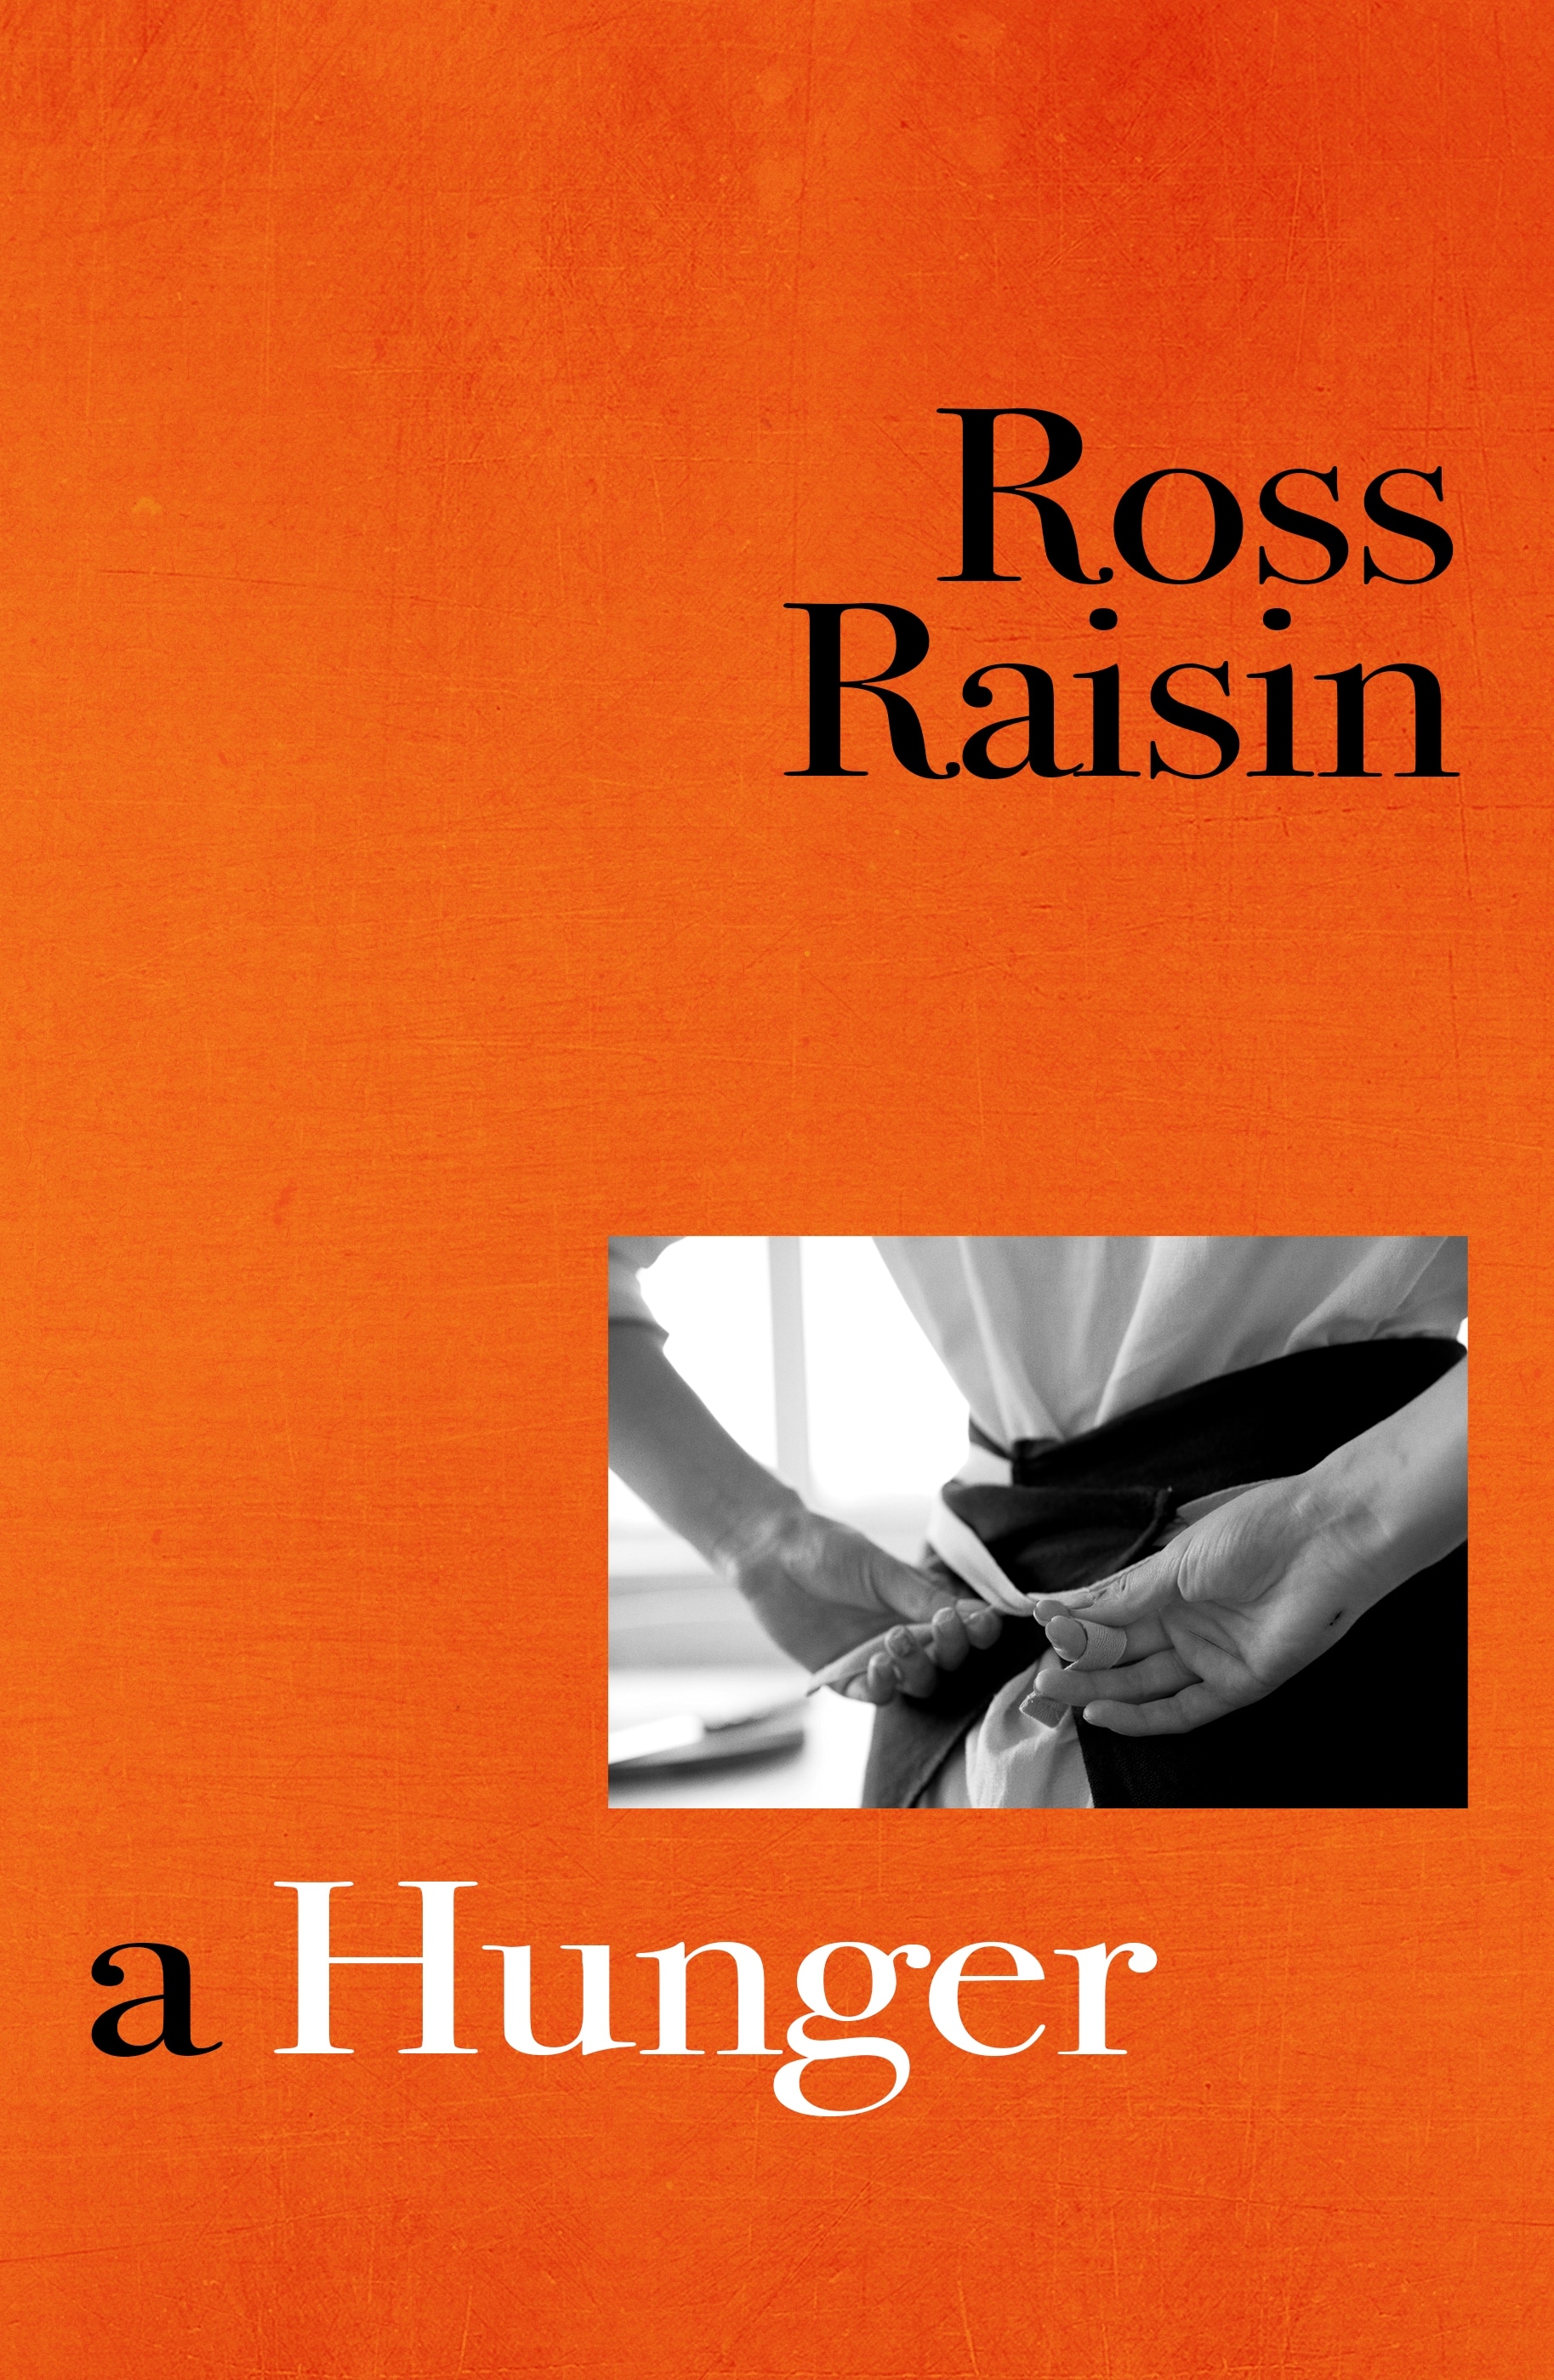 Book “A Hunger” by Ross Raisin — August 4, 2022